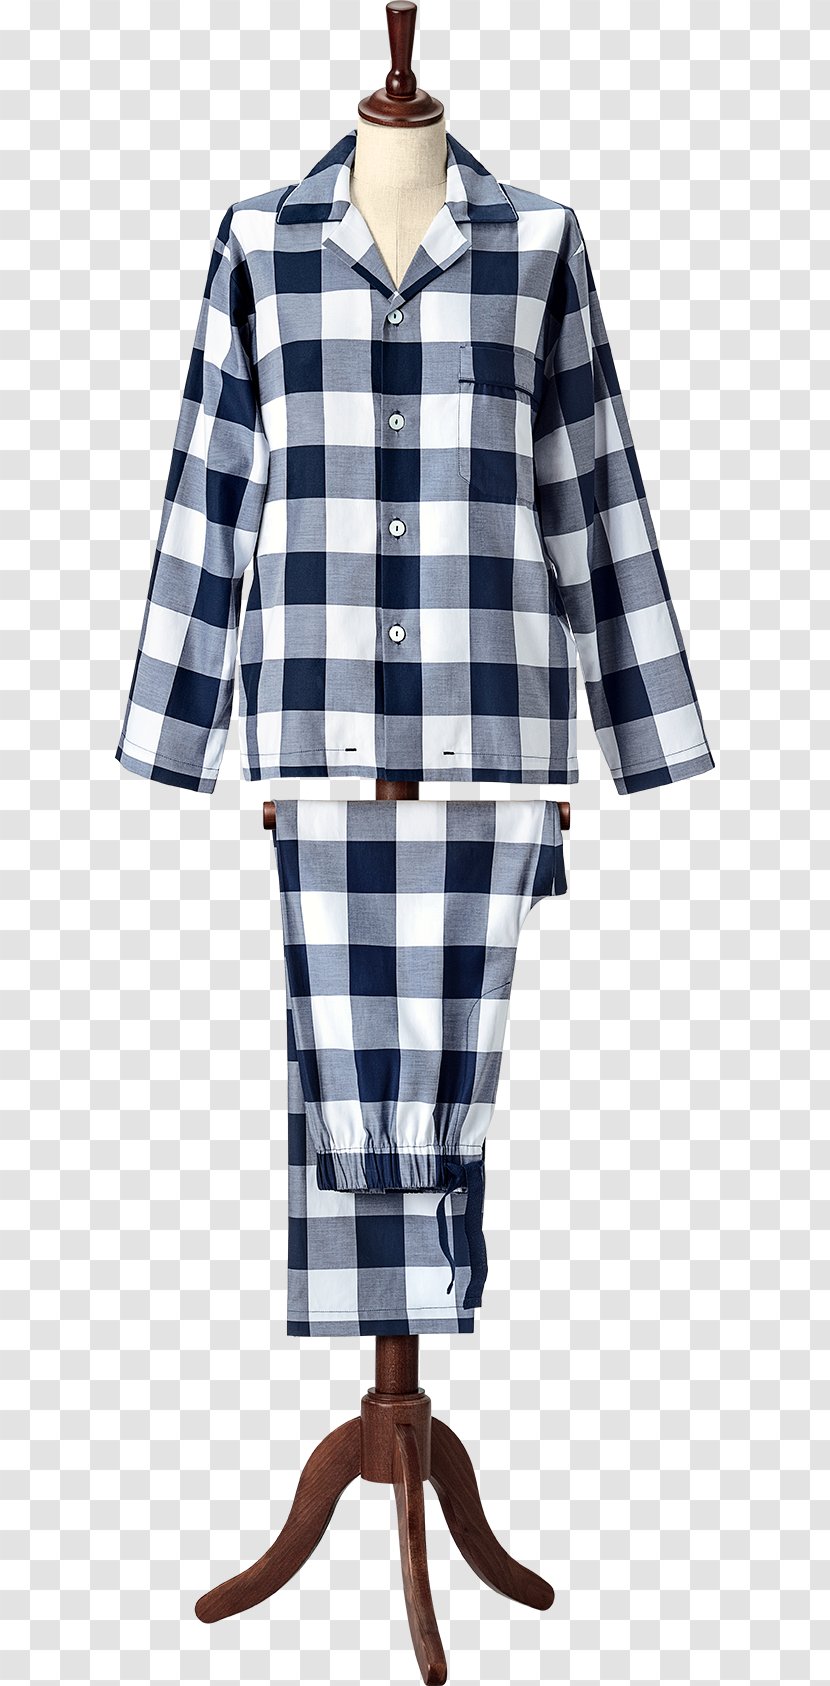 Slipper Pajamas Nightwear Hästens Clothing - Bed Transparent PNG